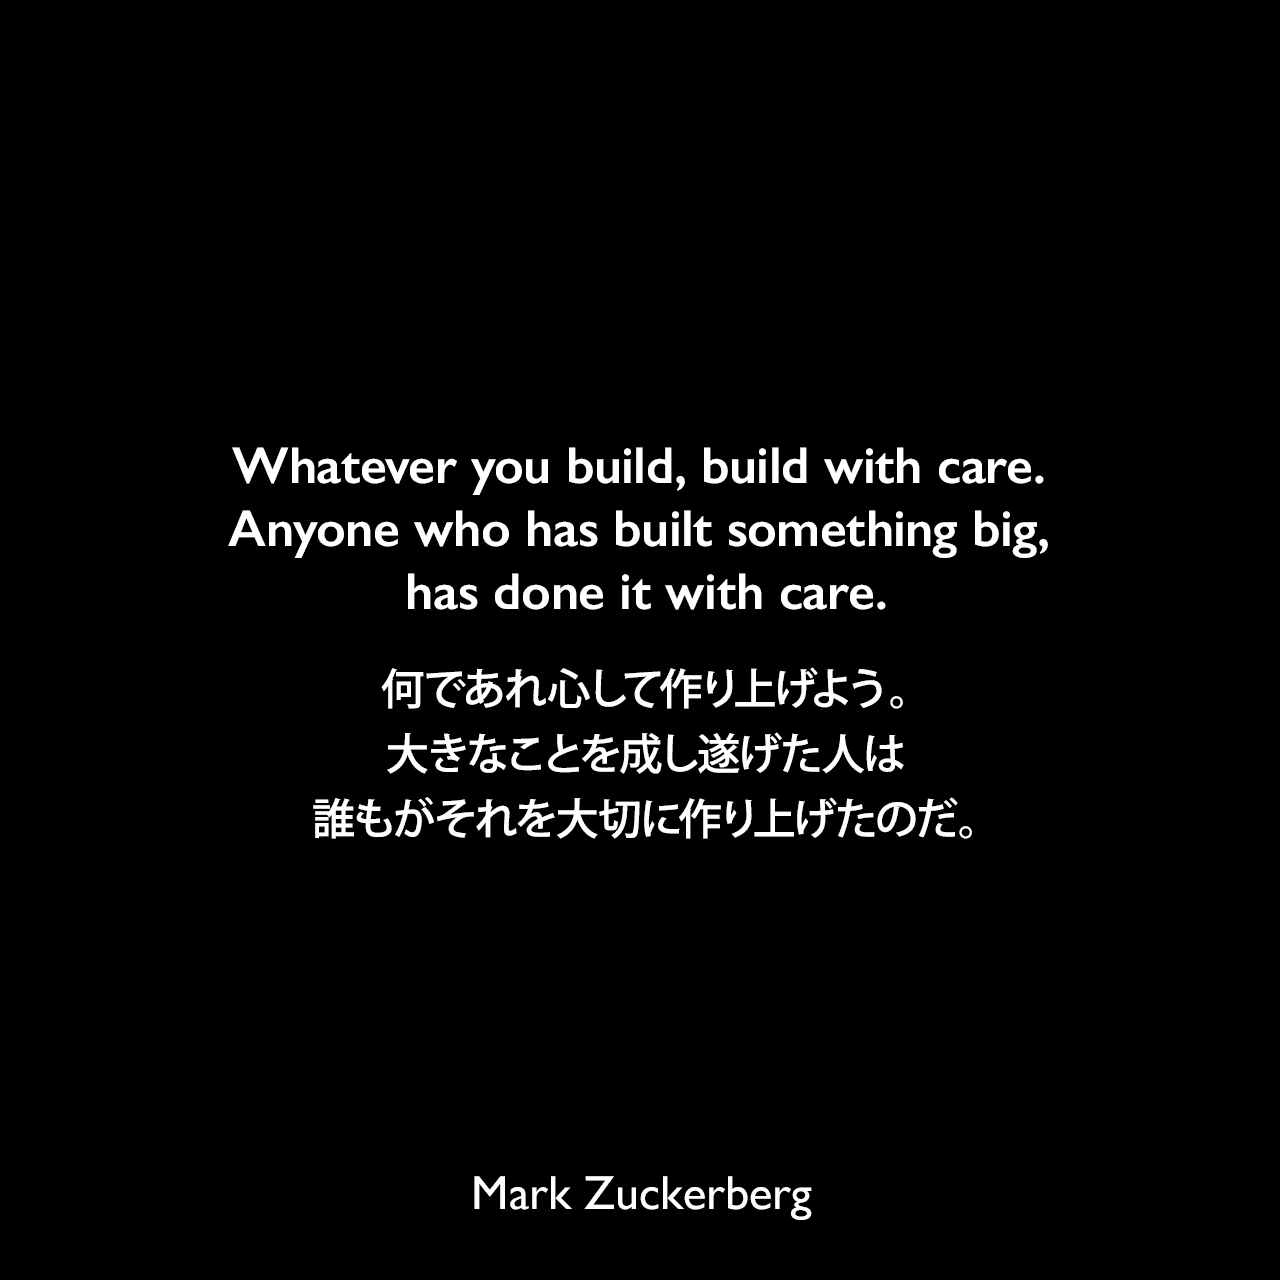 Whatever you build, build with care. Anyone who has built something big, has done it with care.何であれ心して作り上げよう。大きなことを成し遂げた人は誰もがそれを大切に作り上げたのだ。Mark Zuckerberg